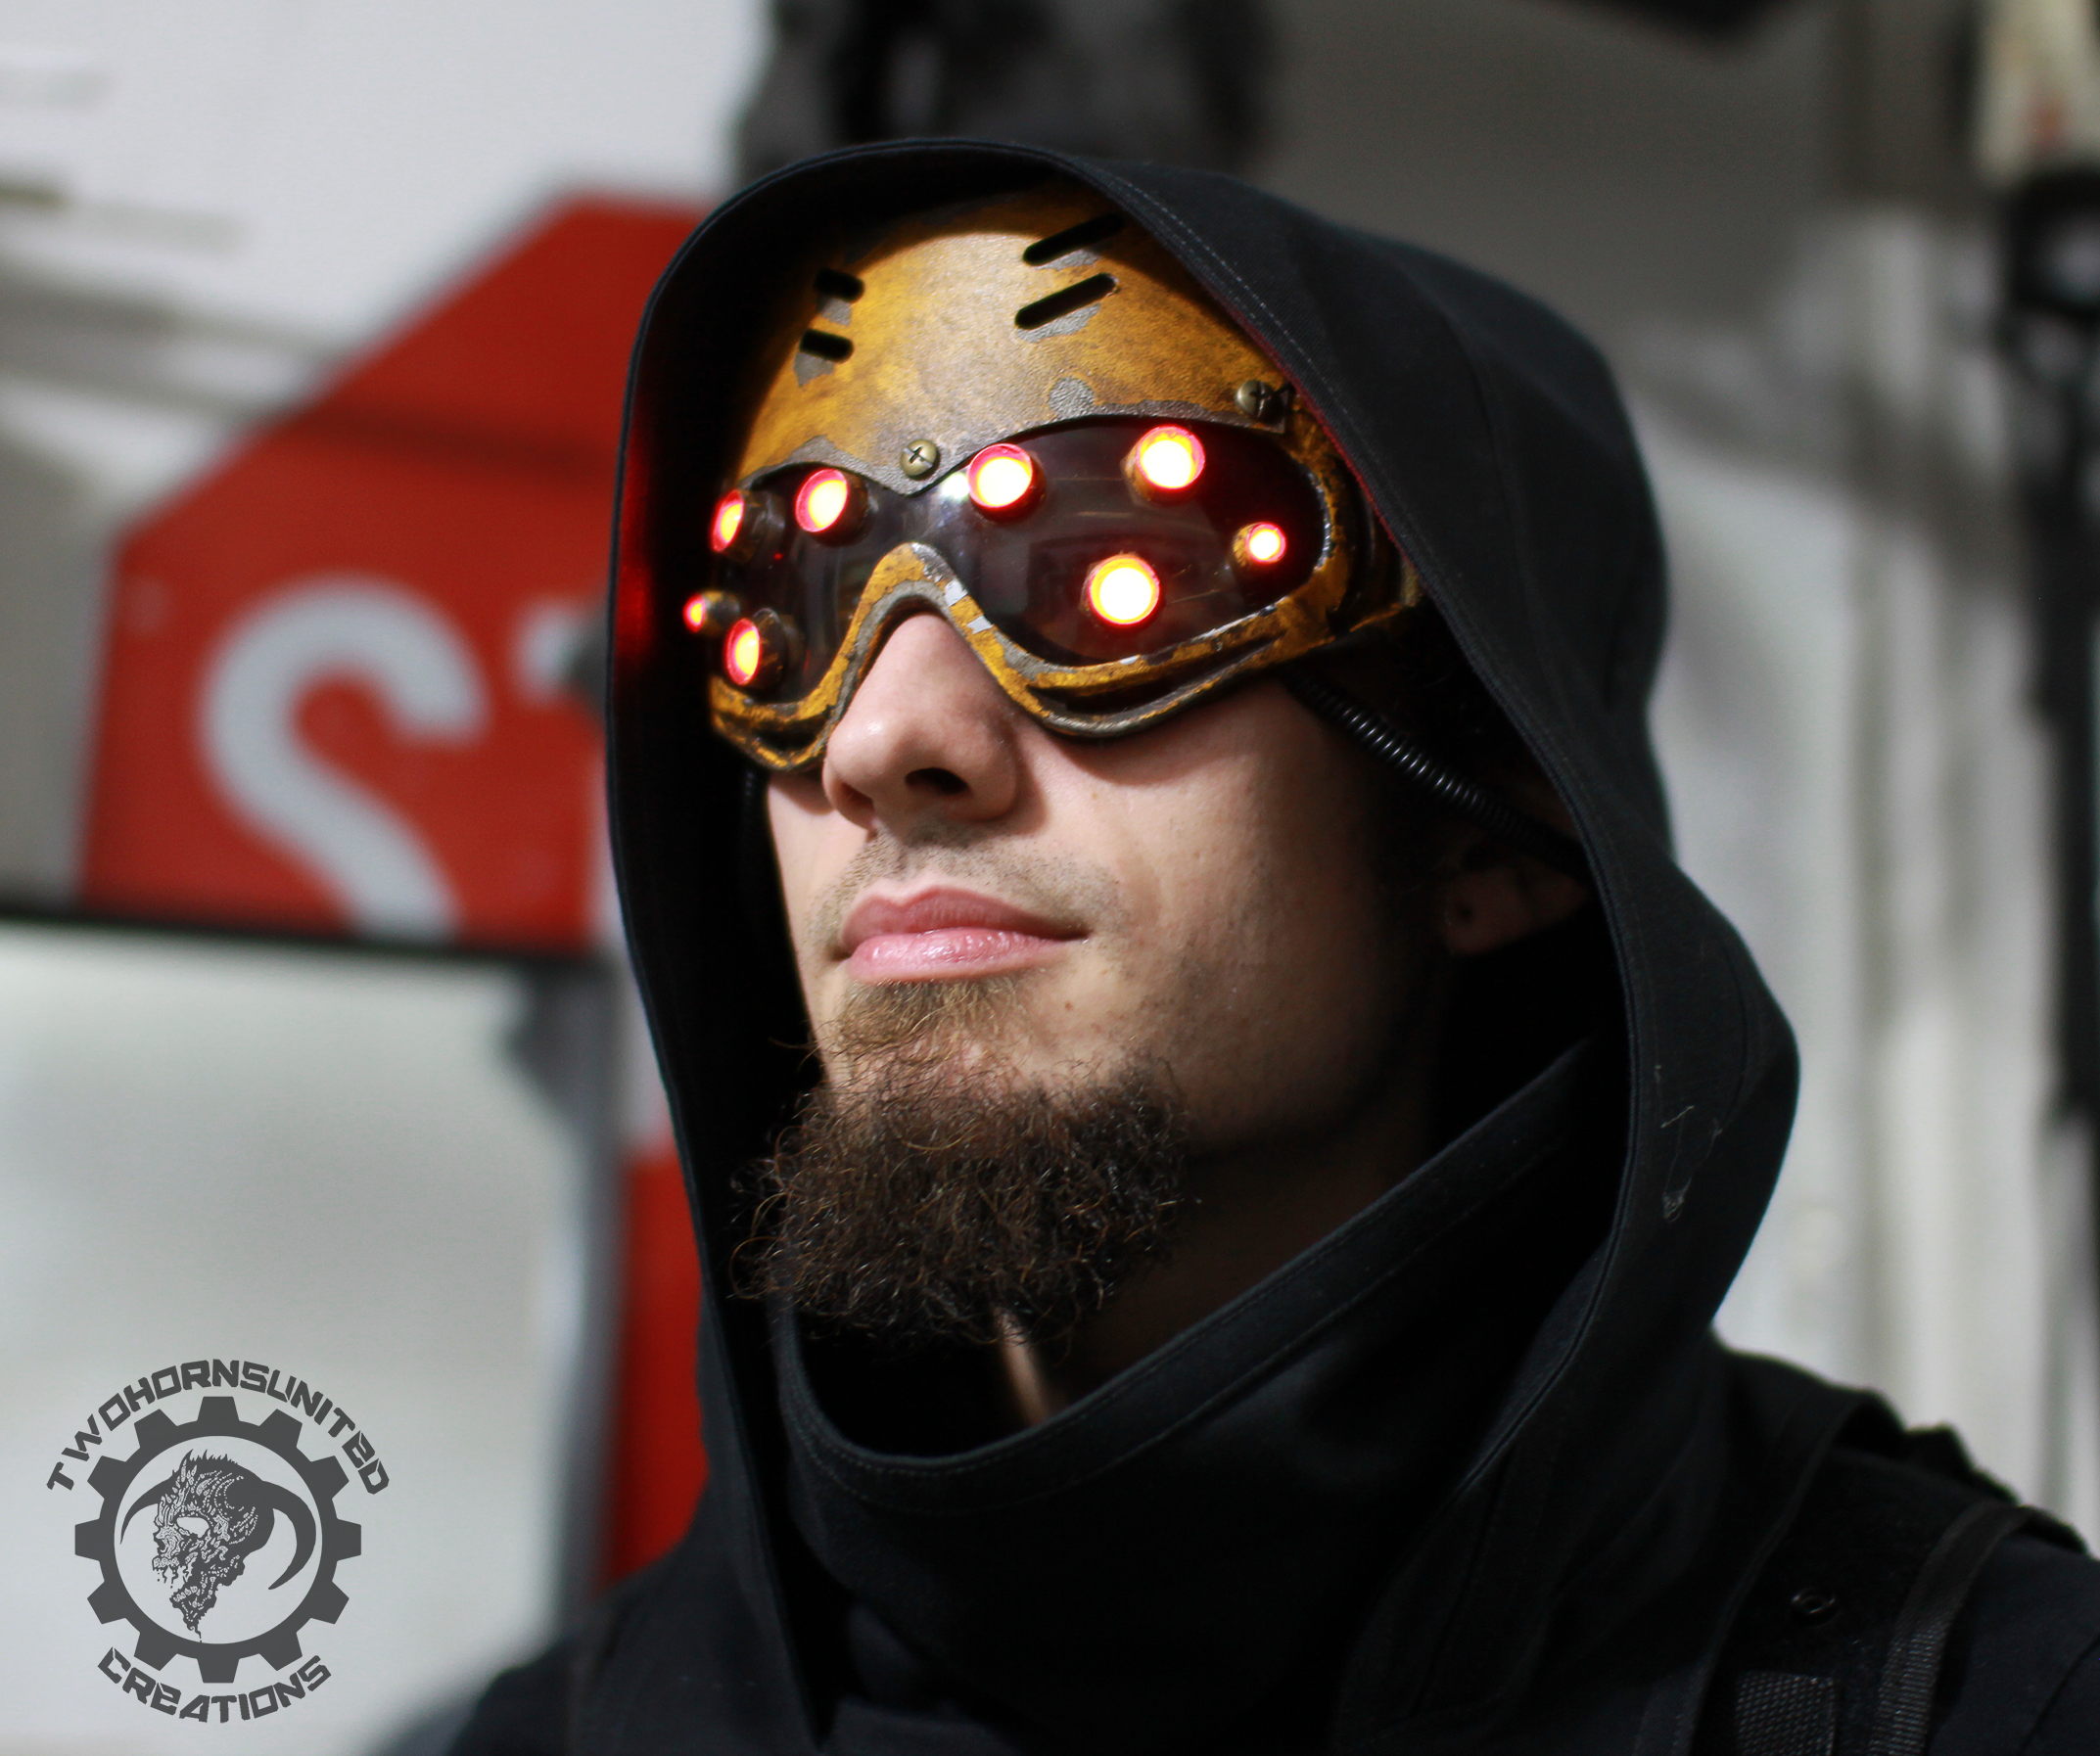 Cyberpunk style очки фото 118